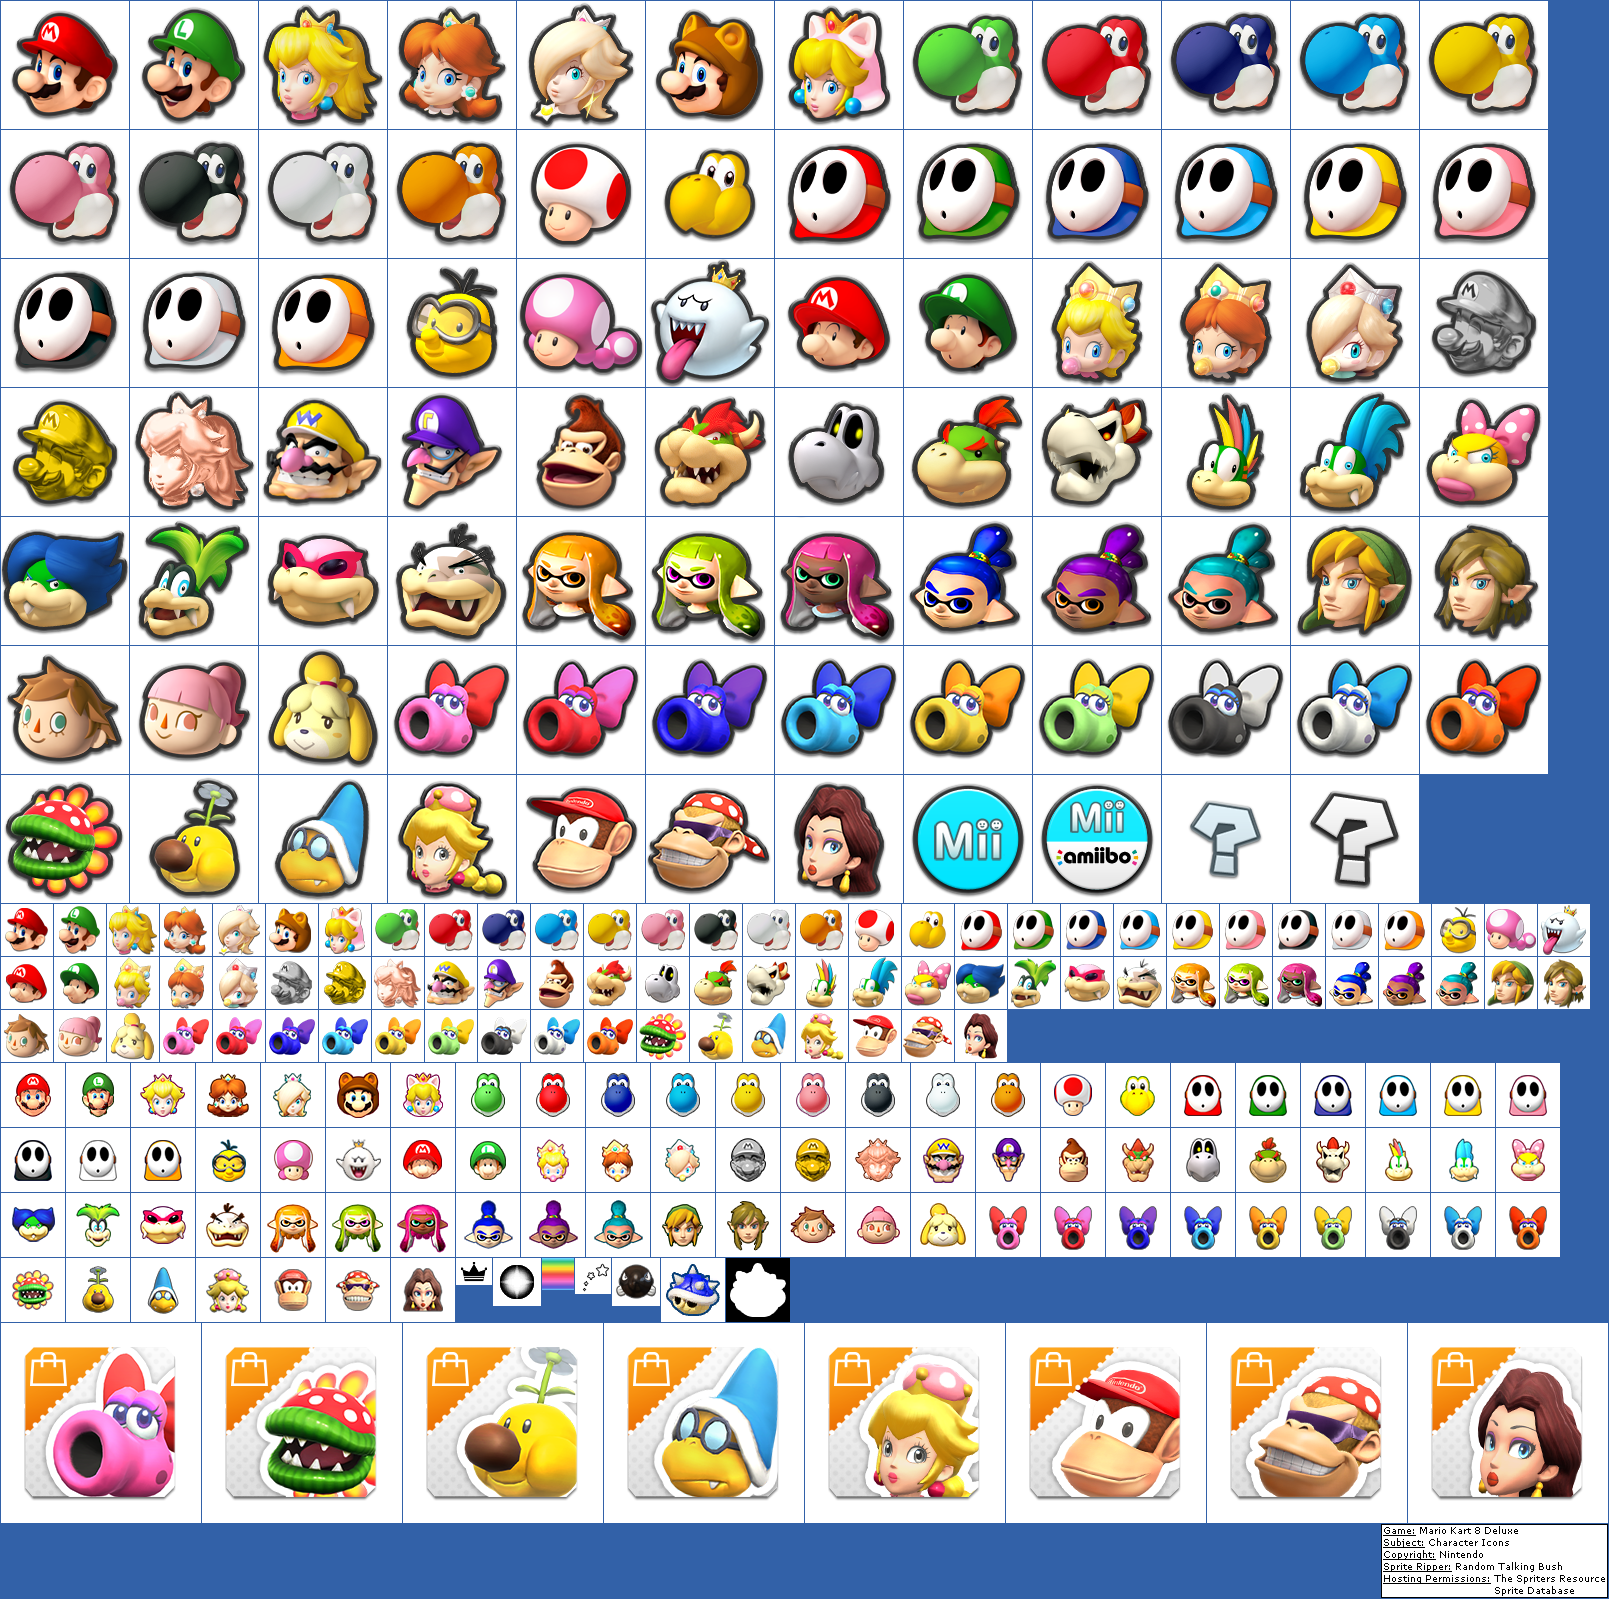 Mario Kart 8 Deluxe - Character Icons